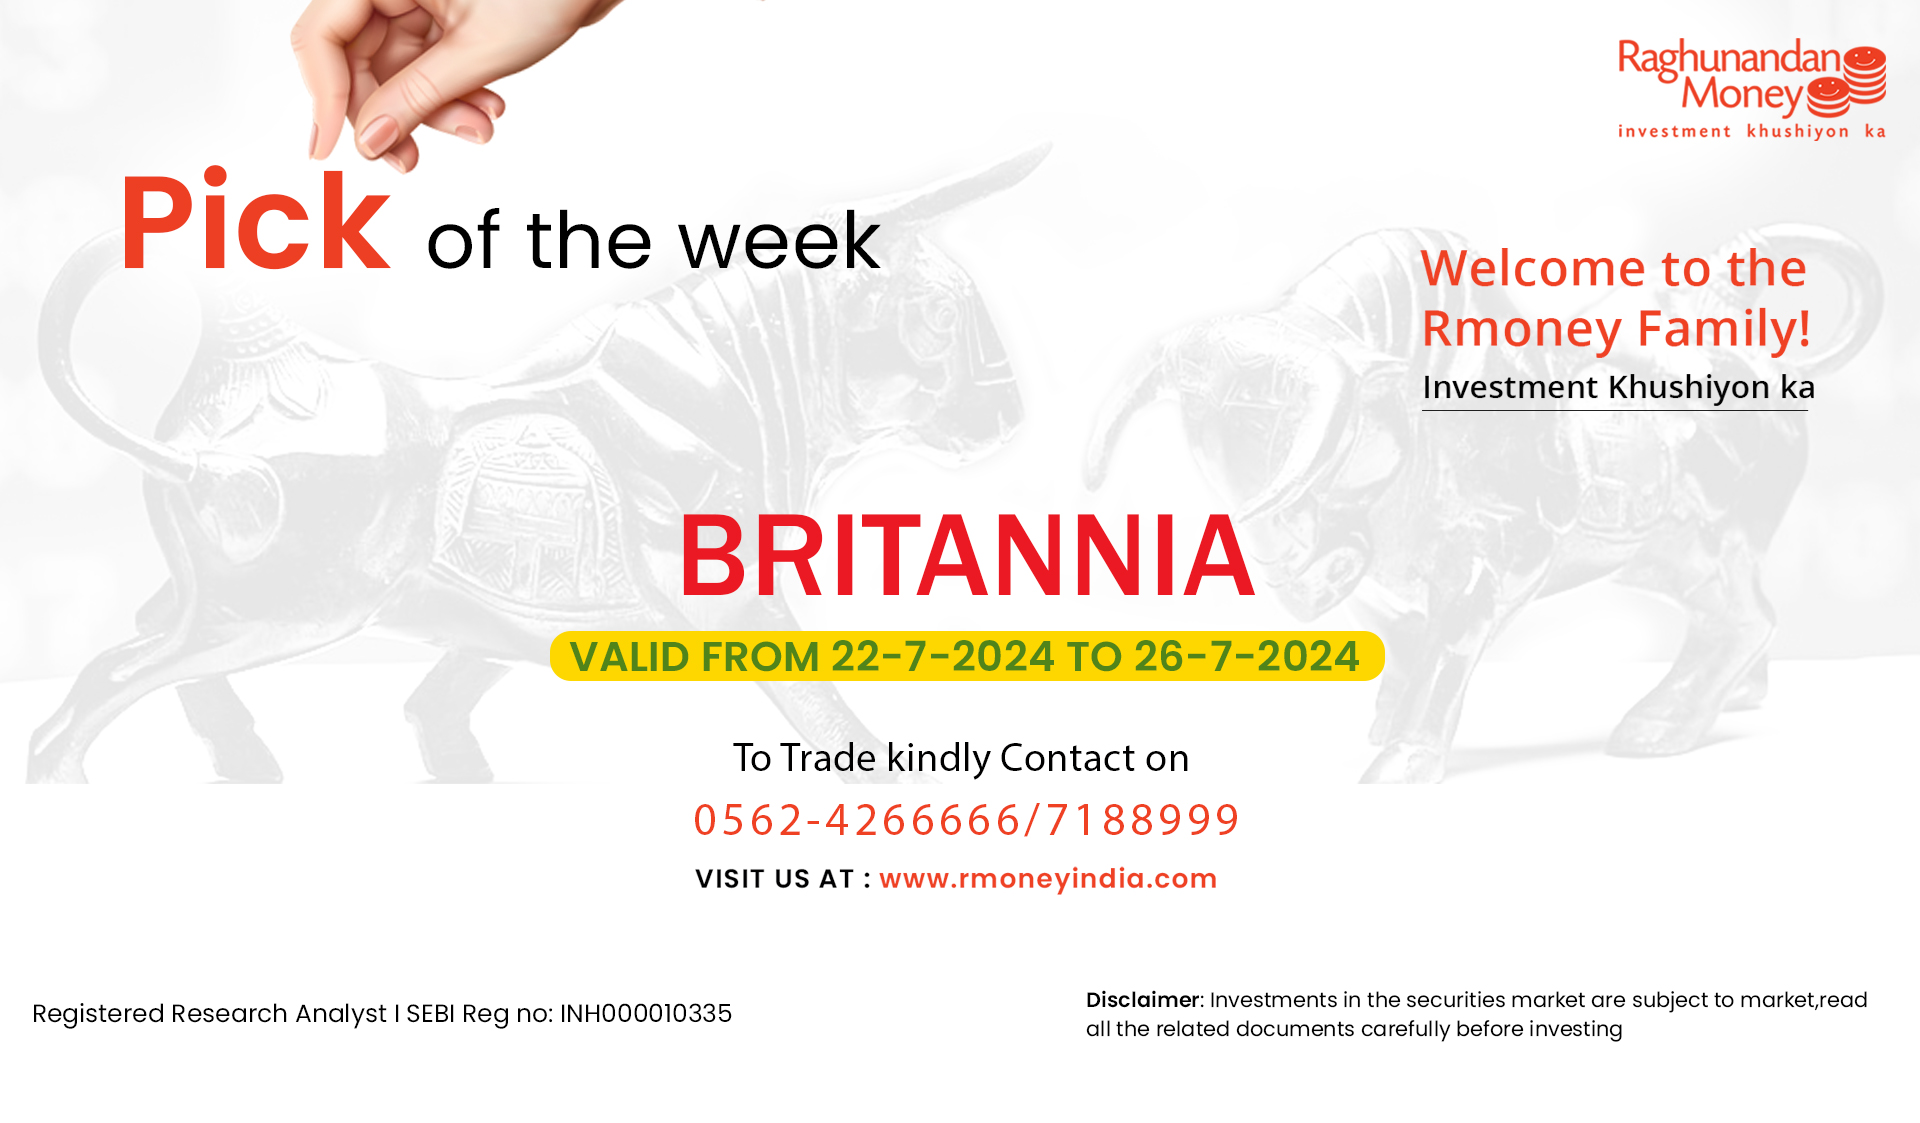 Britannia-Pick-of-the-week-Footer